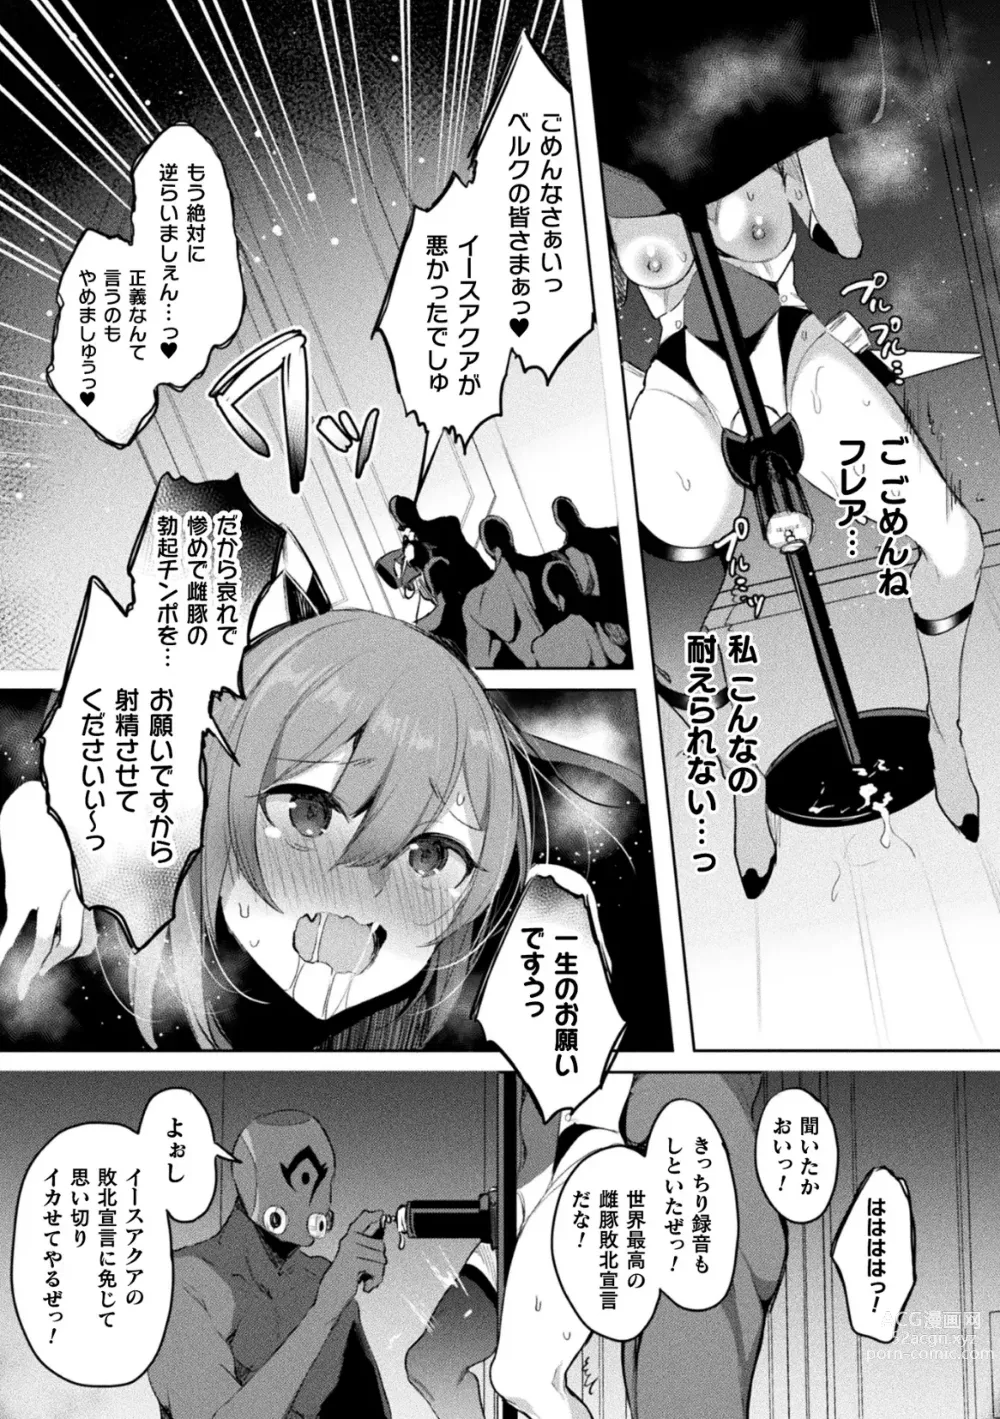 Page 15 of manga Kukkoro Heroines Vol. 35